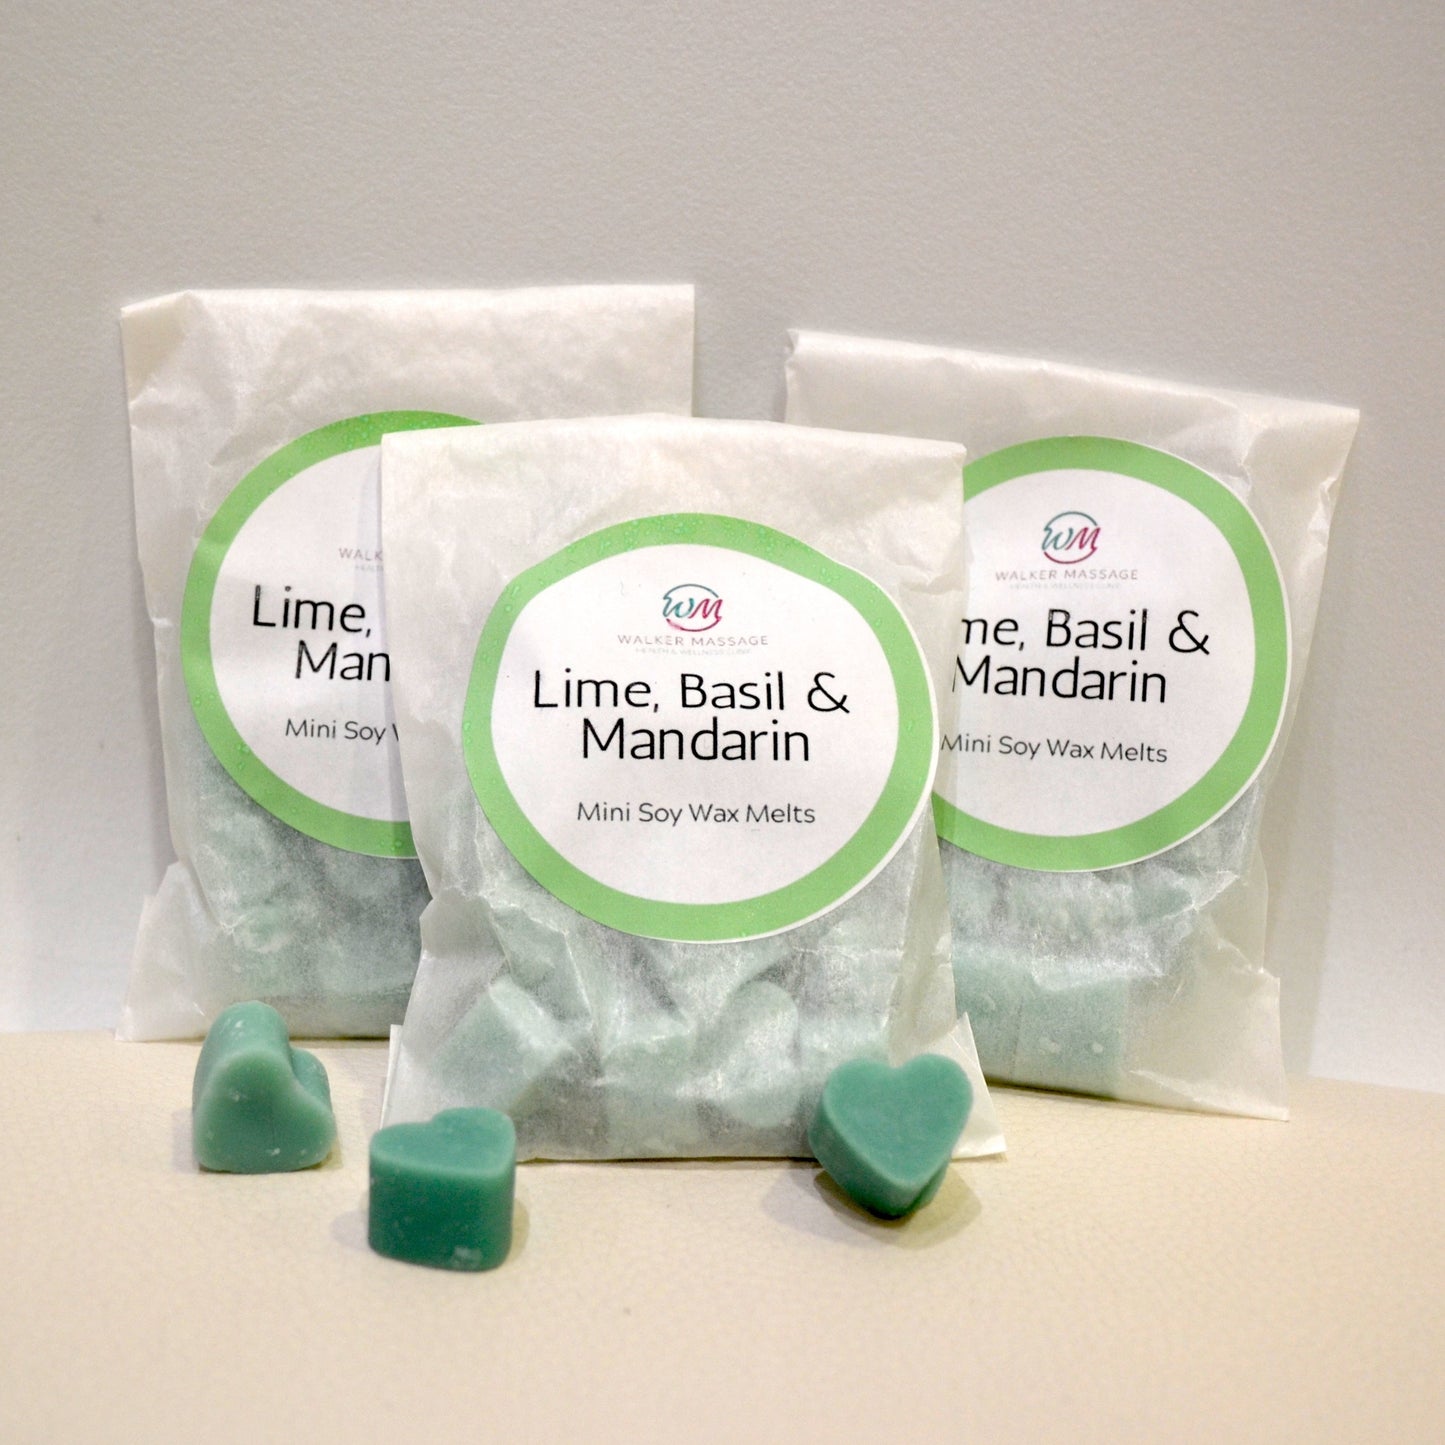 Lime, Basil & Mandarin - Mini Wax Melt Hearts Bag